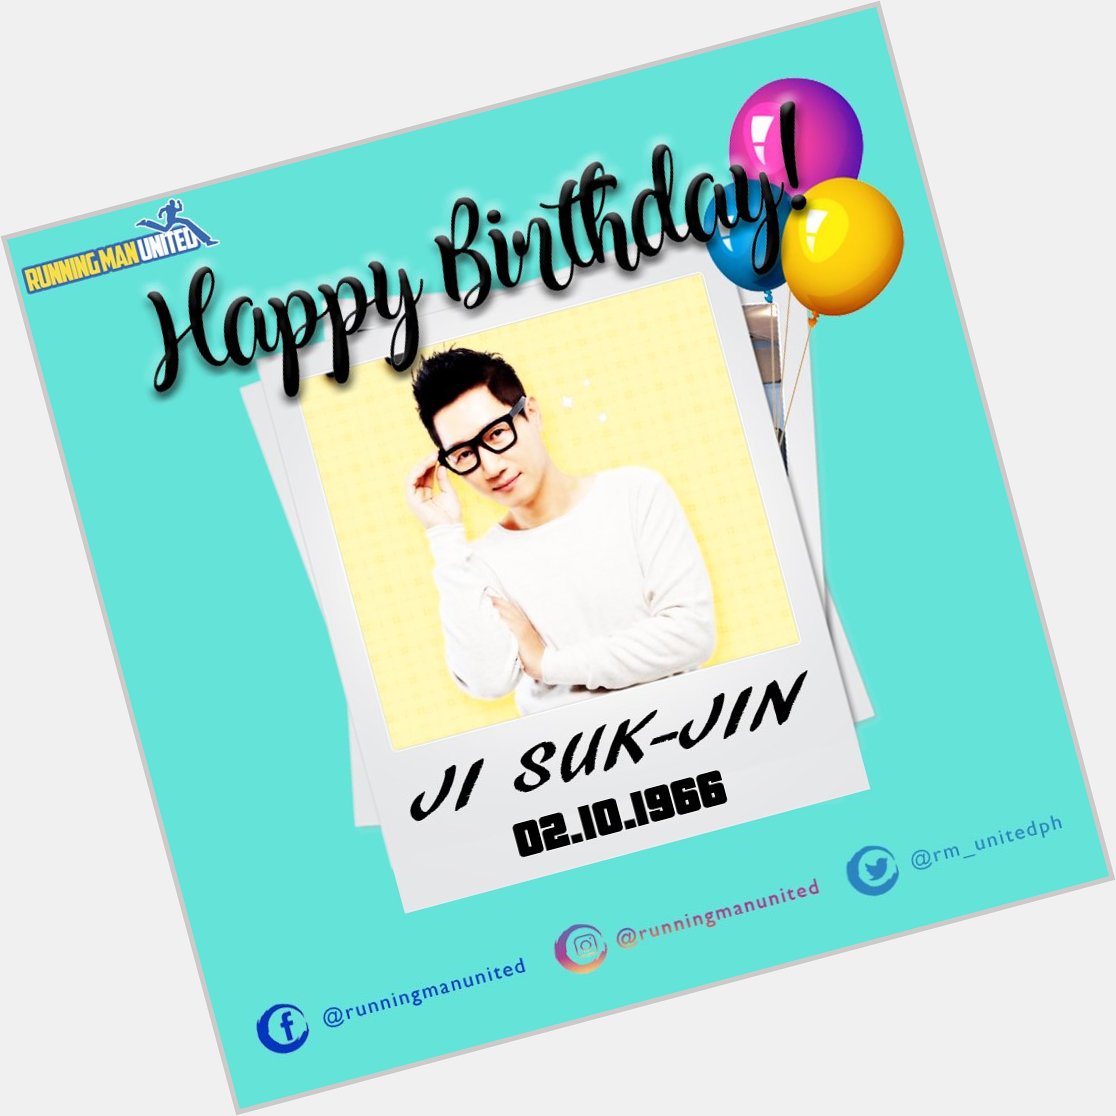 Sorry and Belated
Happy Birthday Ji Suk-jin! 